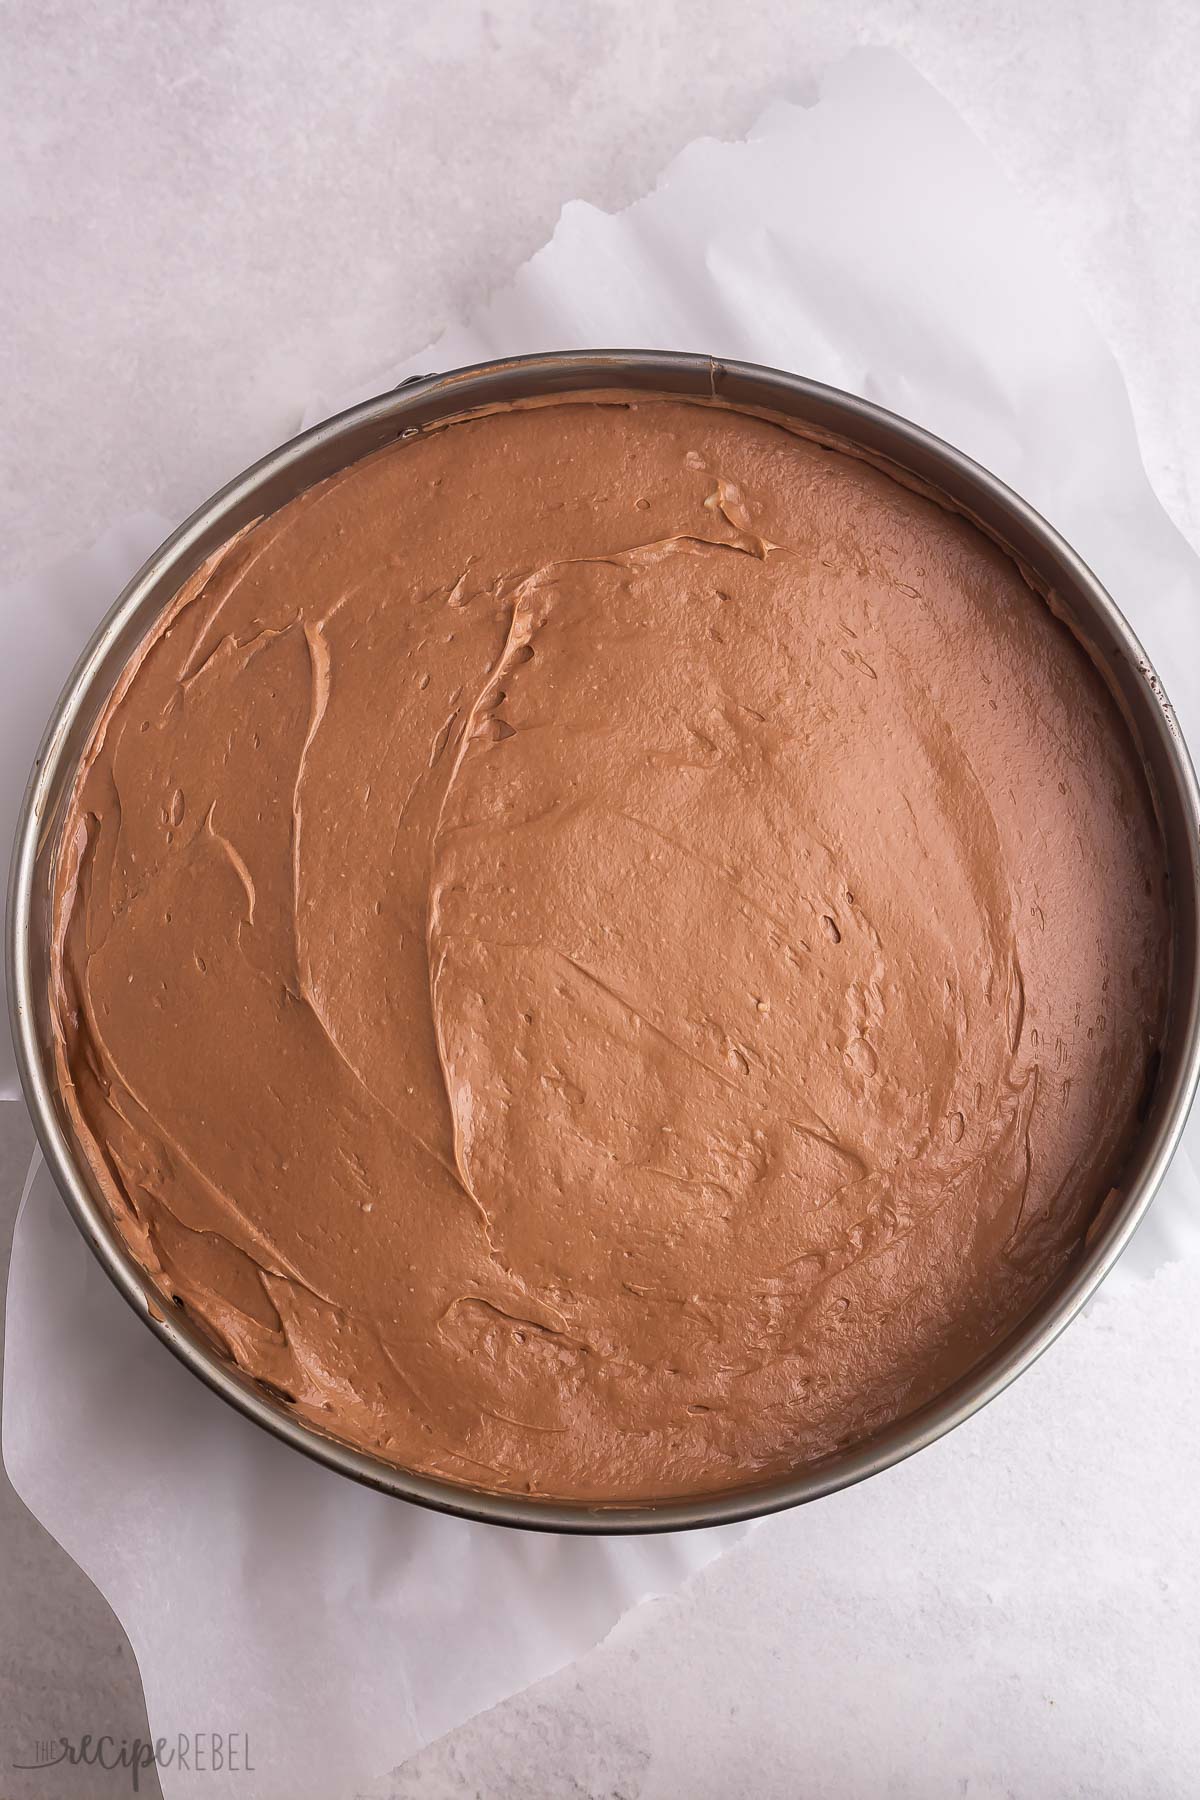 chocolate cheesecake spread into springform pan.